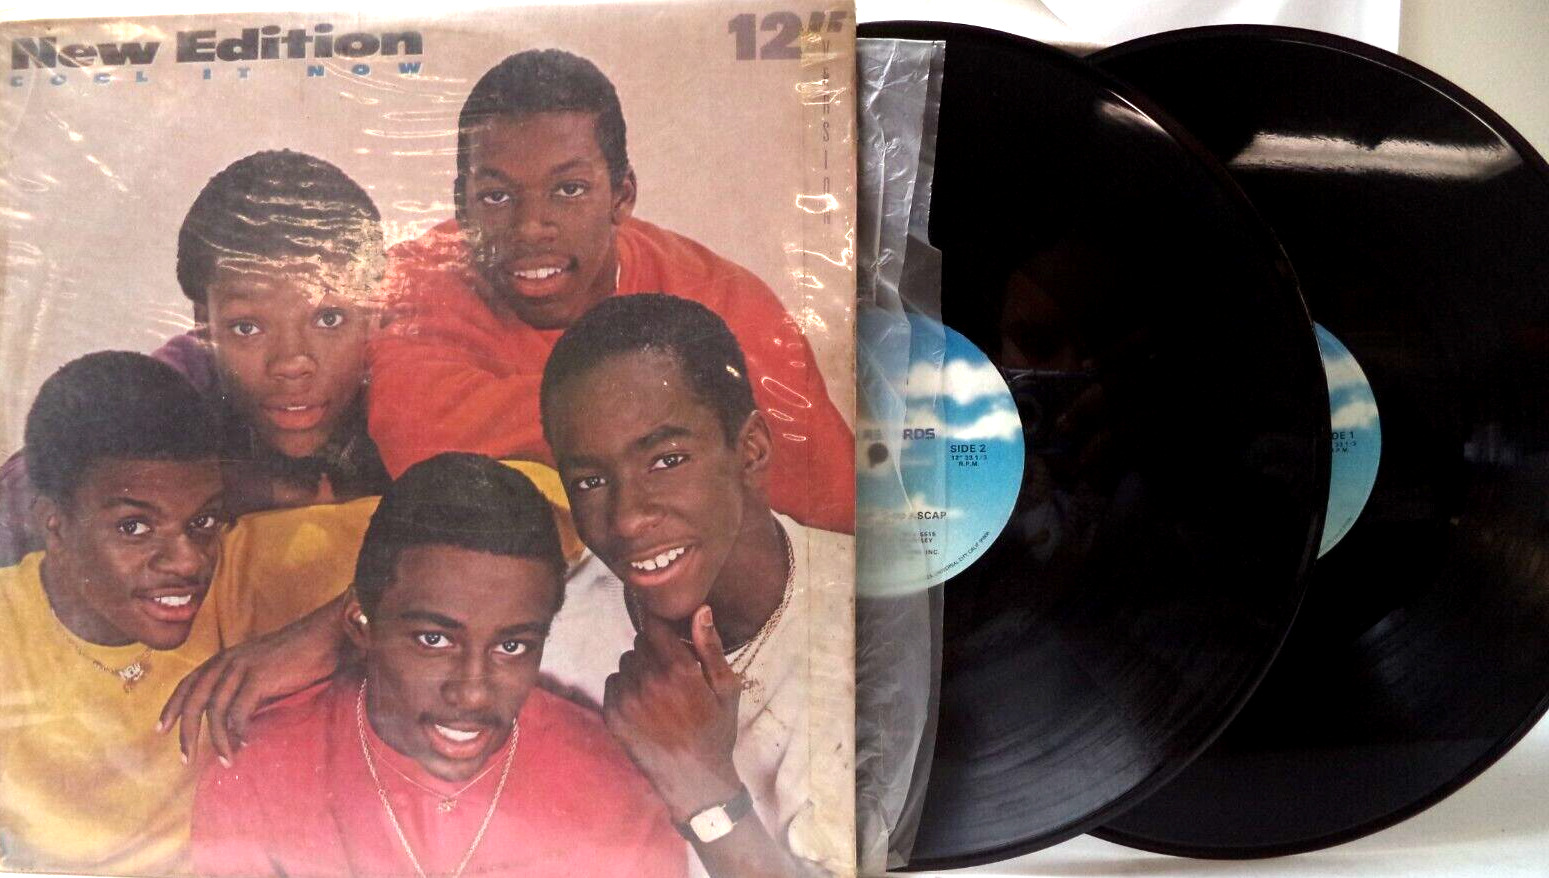 VINTAGE 1984 MCA REC INC NEW EDITION COOL IT NOW (VG) DBL LP ALBUM VINYL N